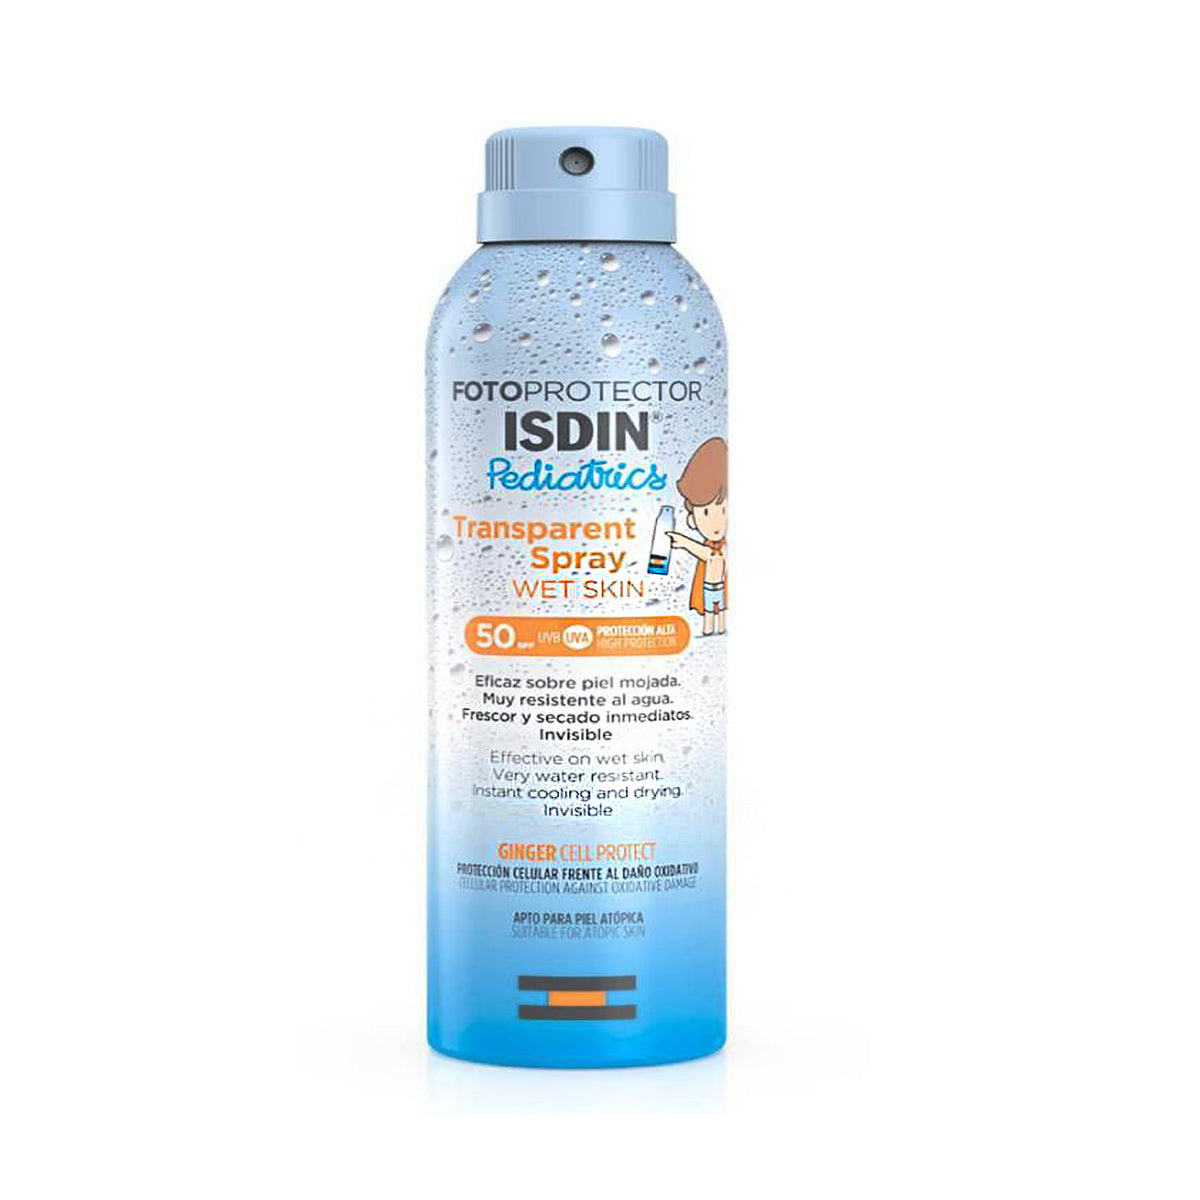 Isdin Fotoprotector Transparent Spray Wet Skin Pediatrics FPS 50